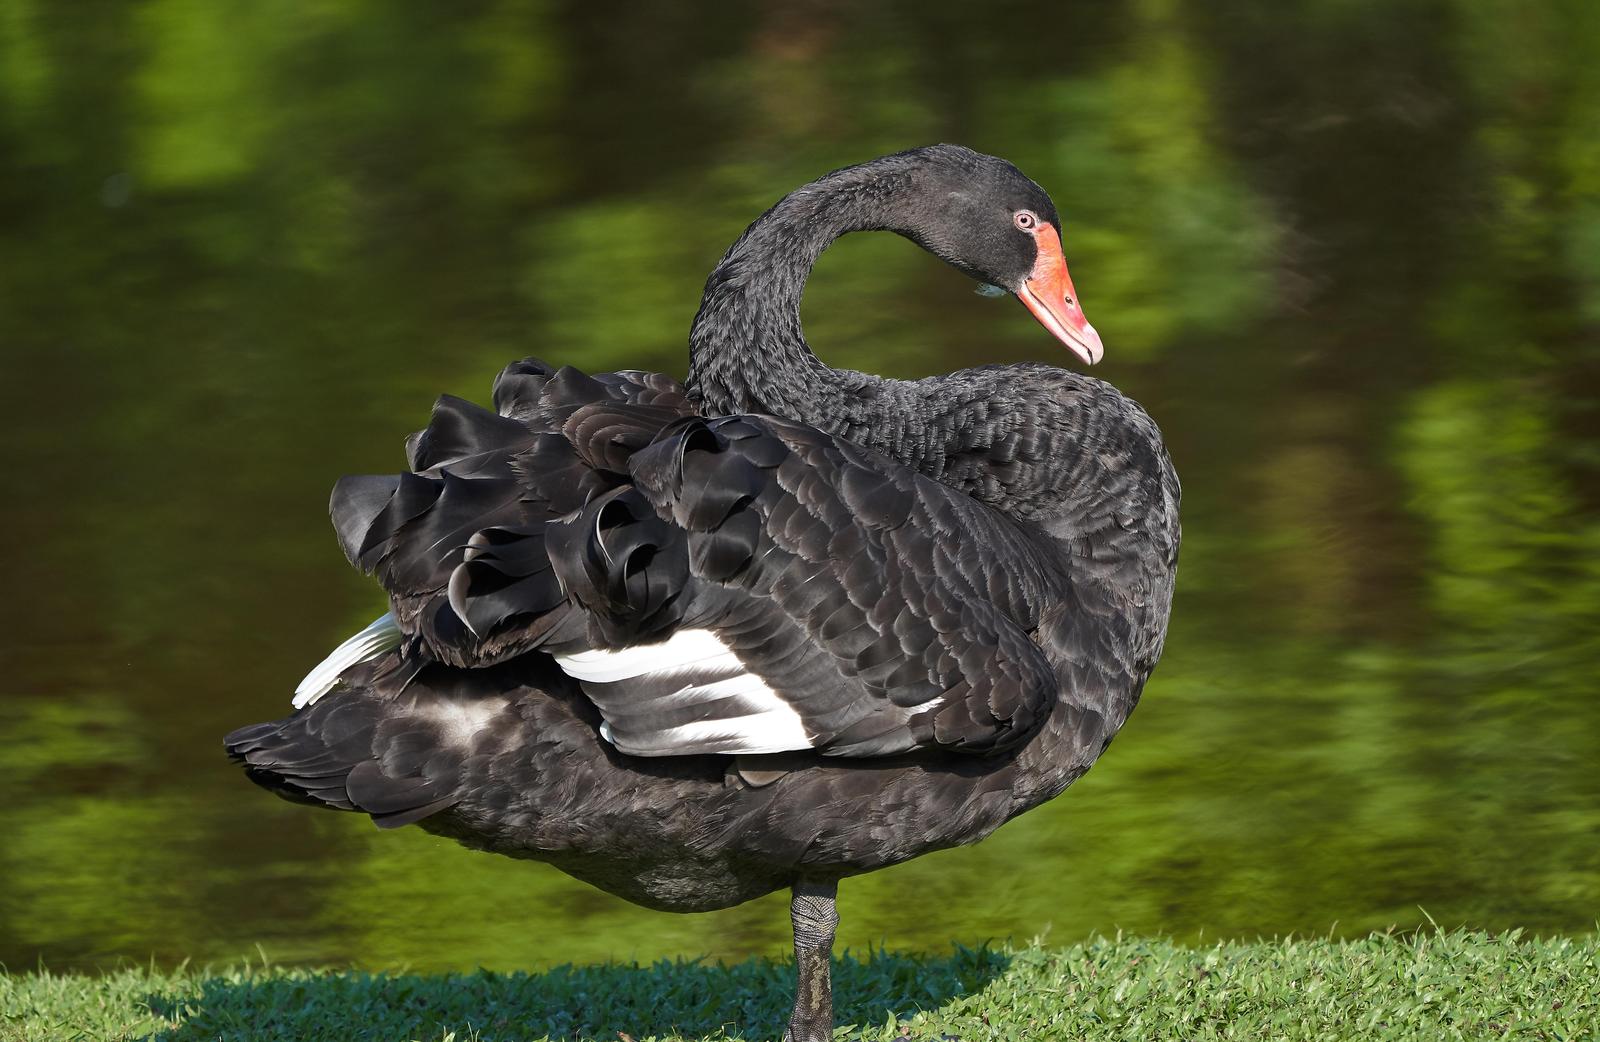 Black Swan Photo by Steven Cheong